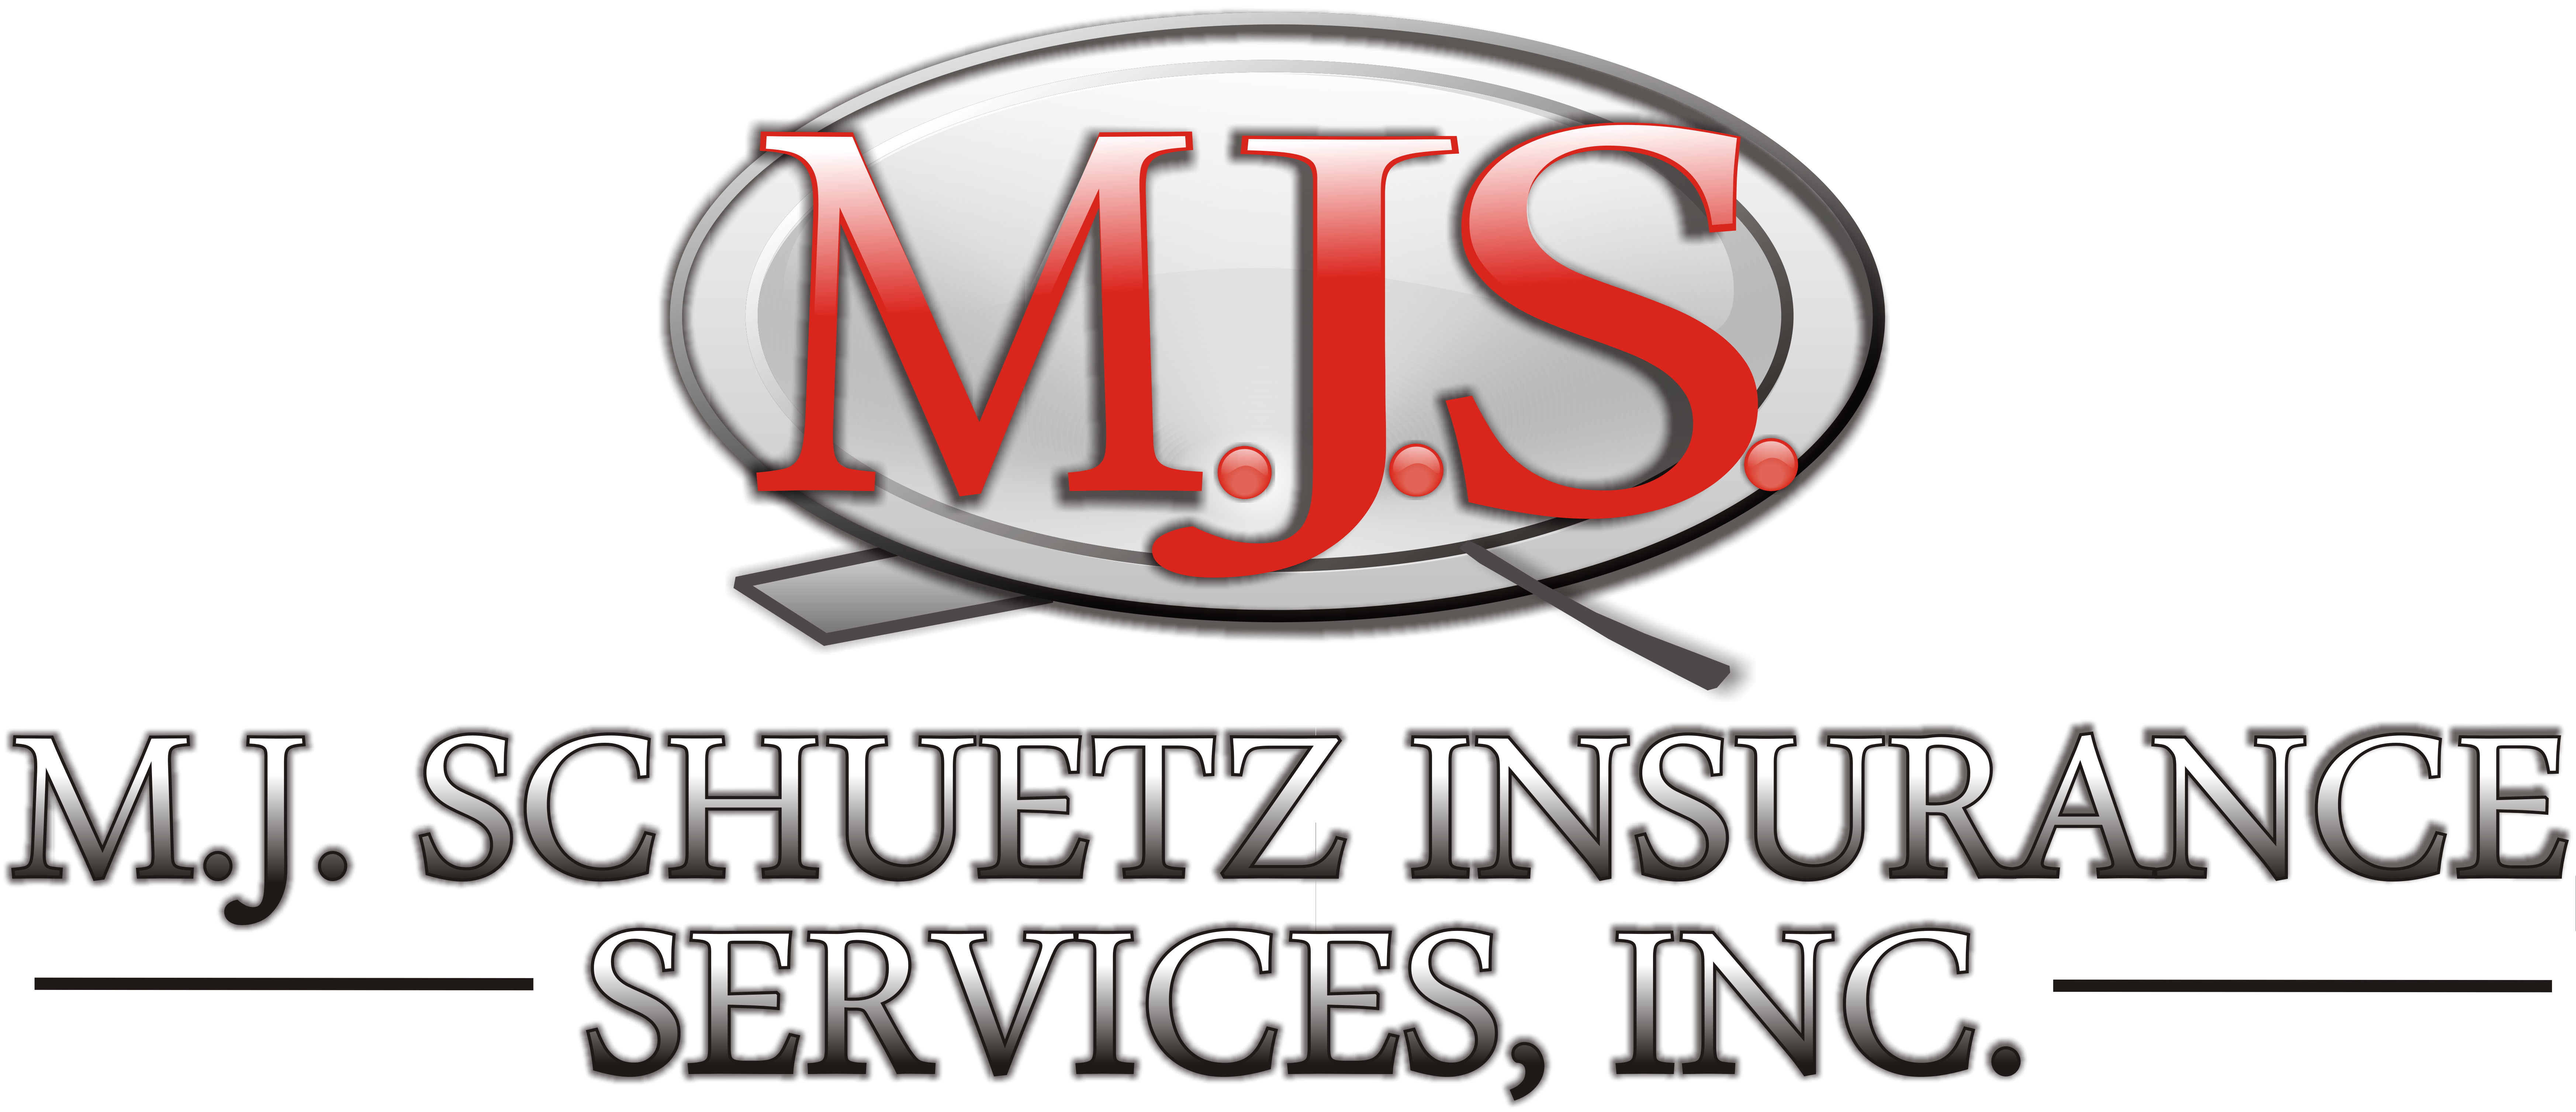 Visit M.J. Schuetz Insurance Agency